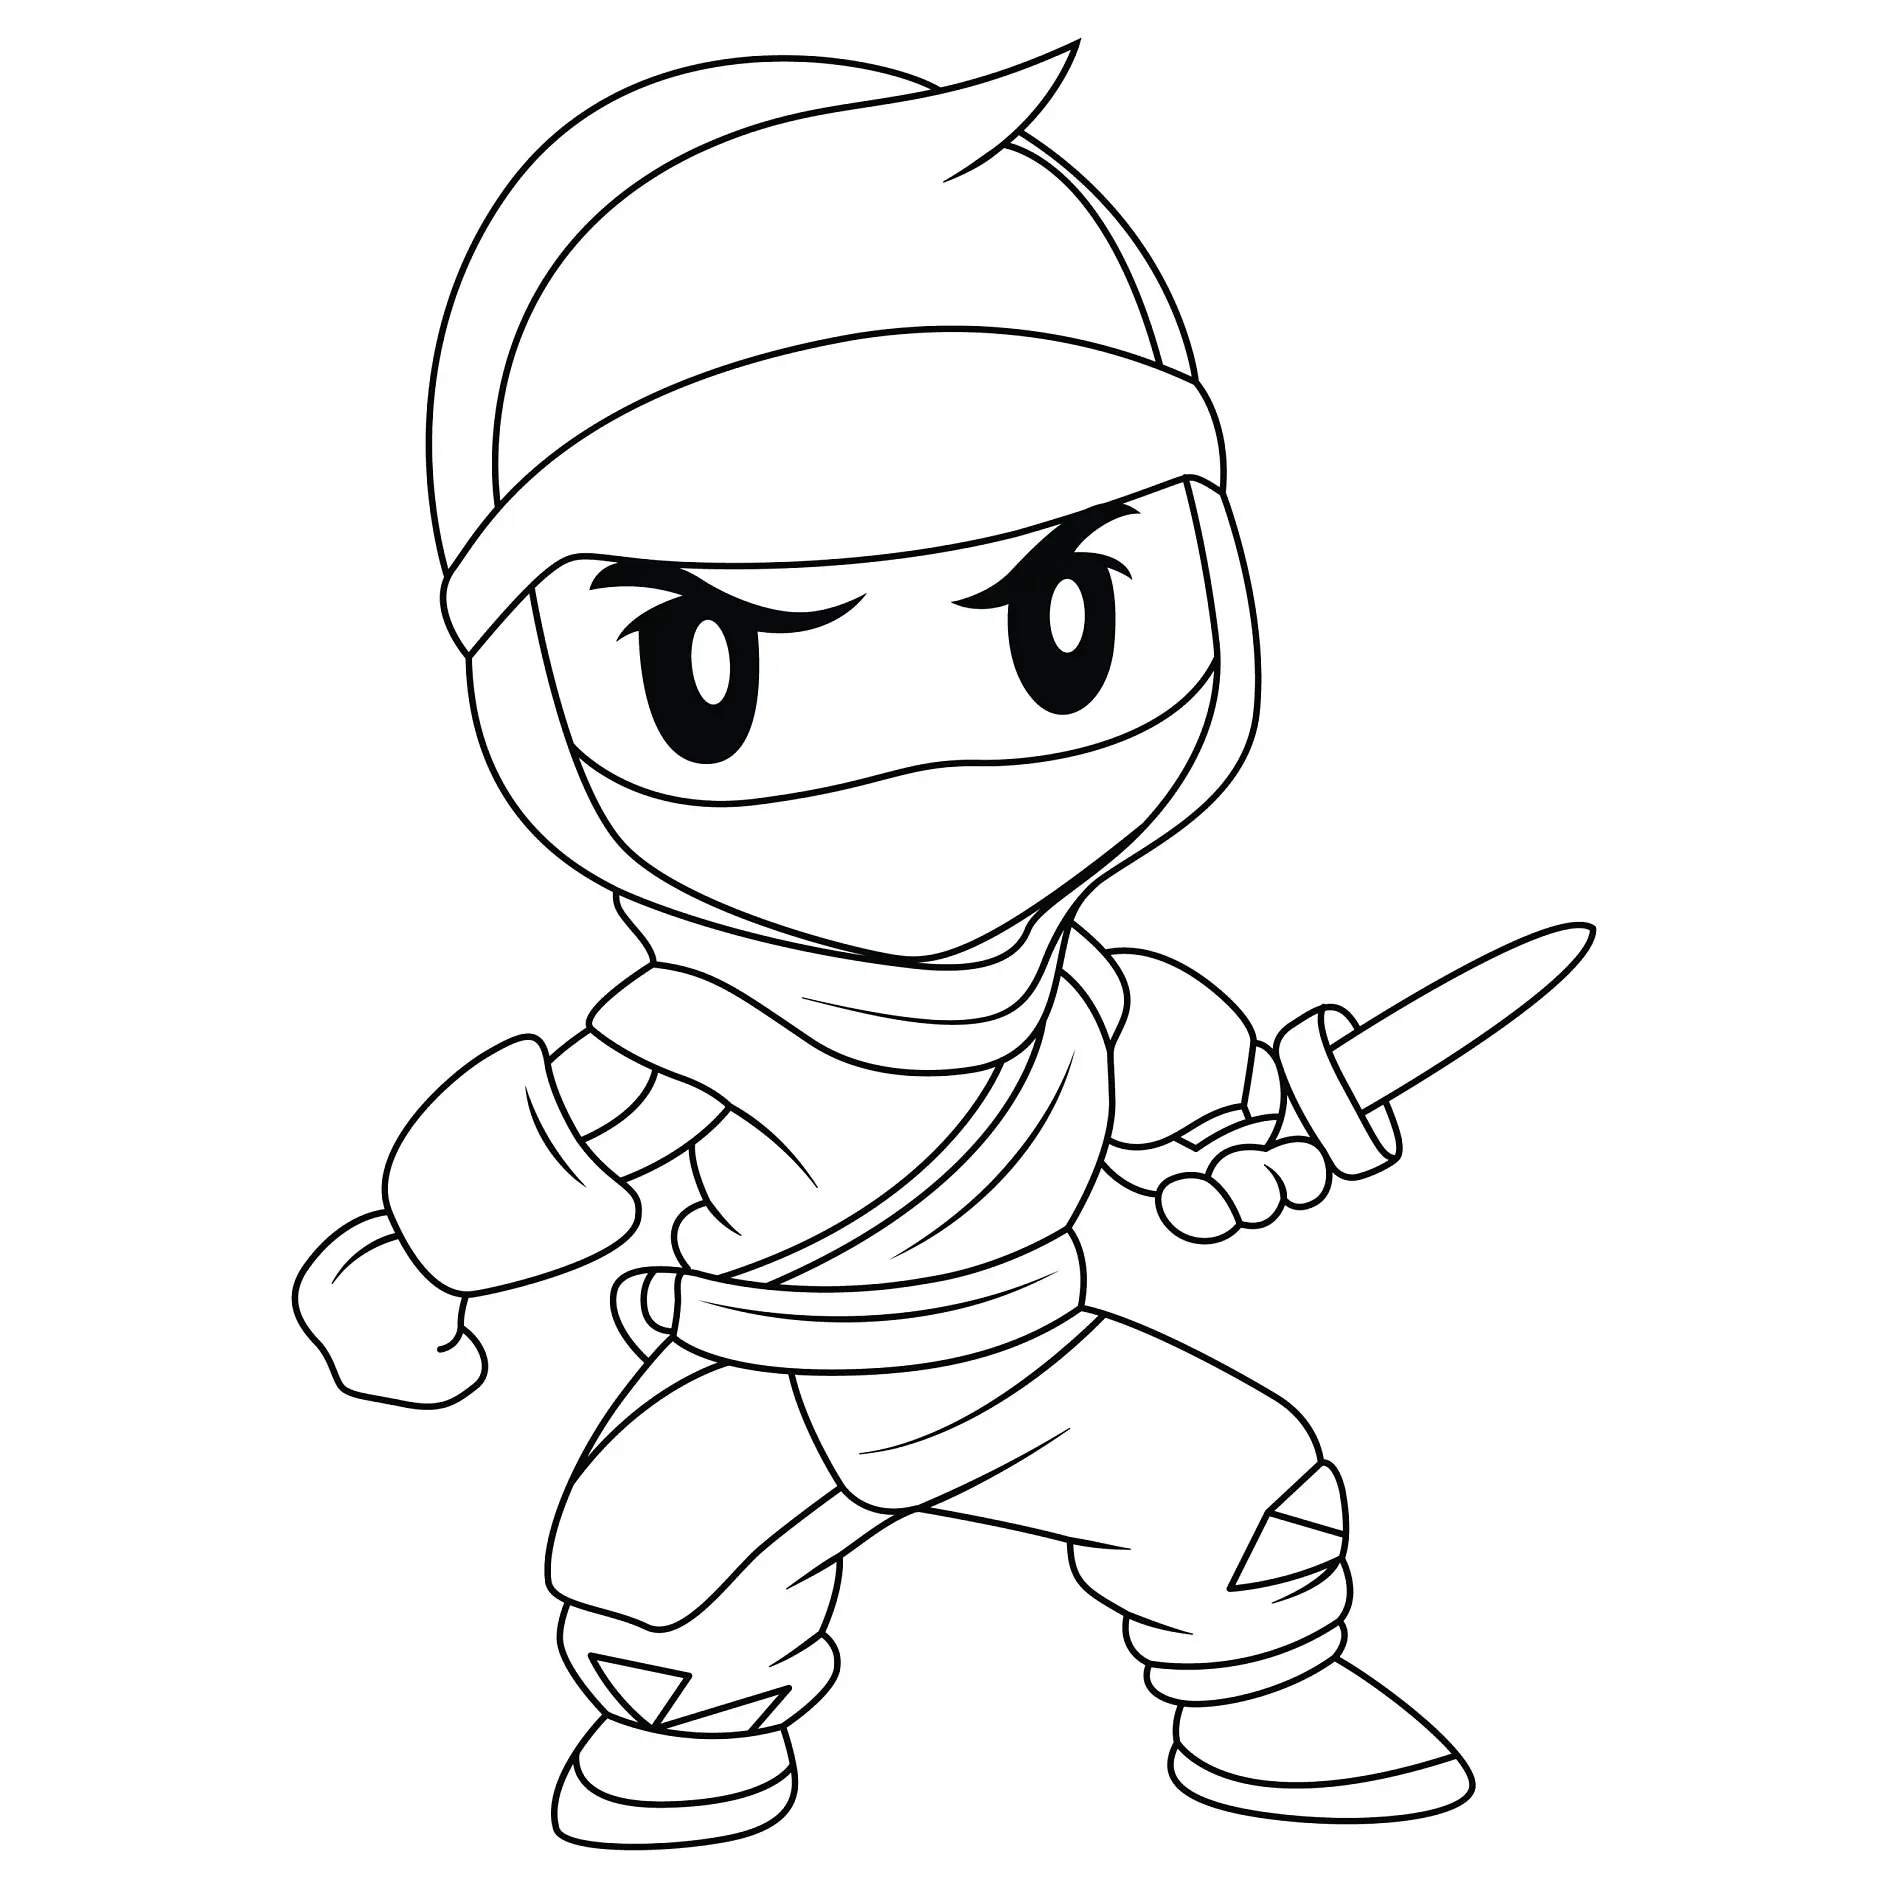 Ausmalbild Ninja bereit zum Kampf mit gezogenem Dolch